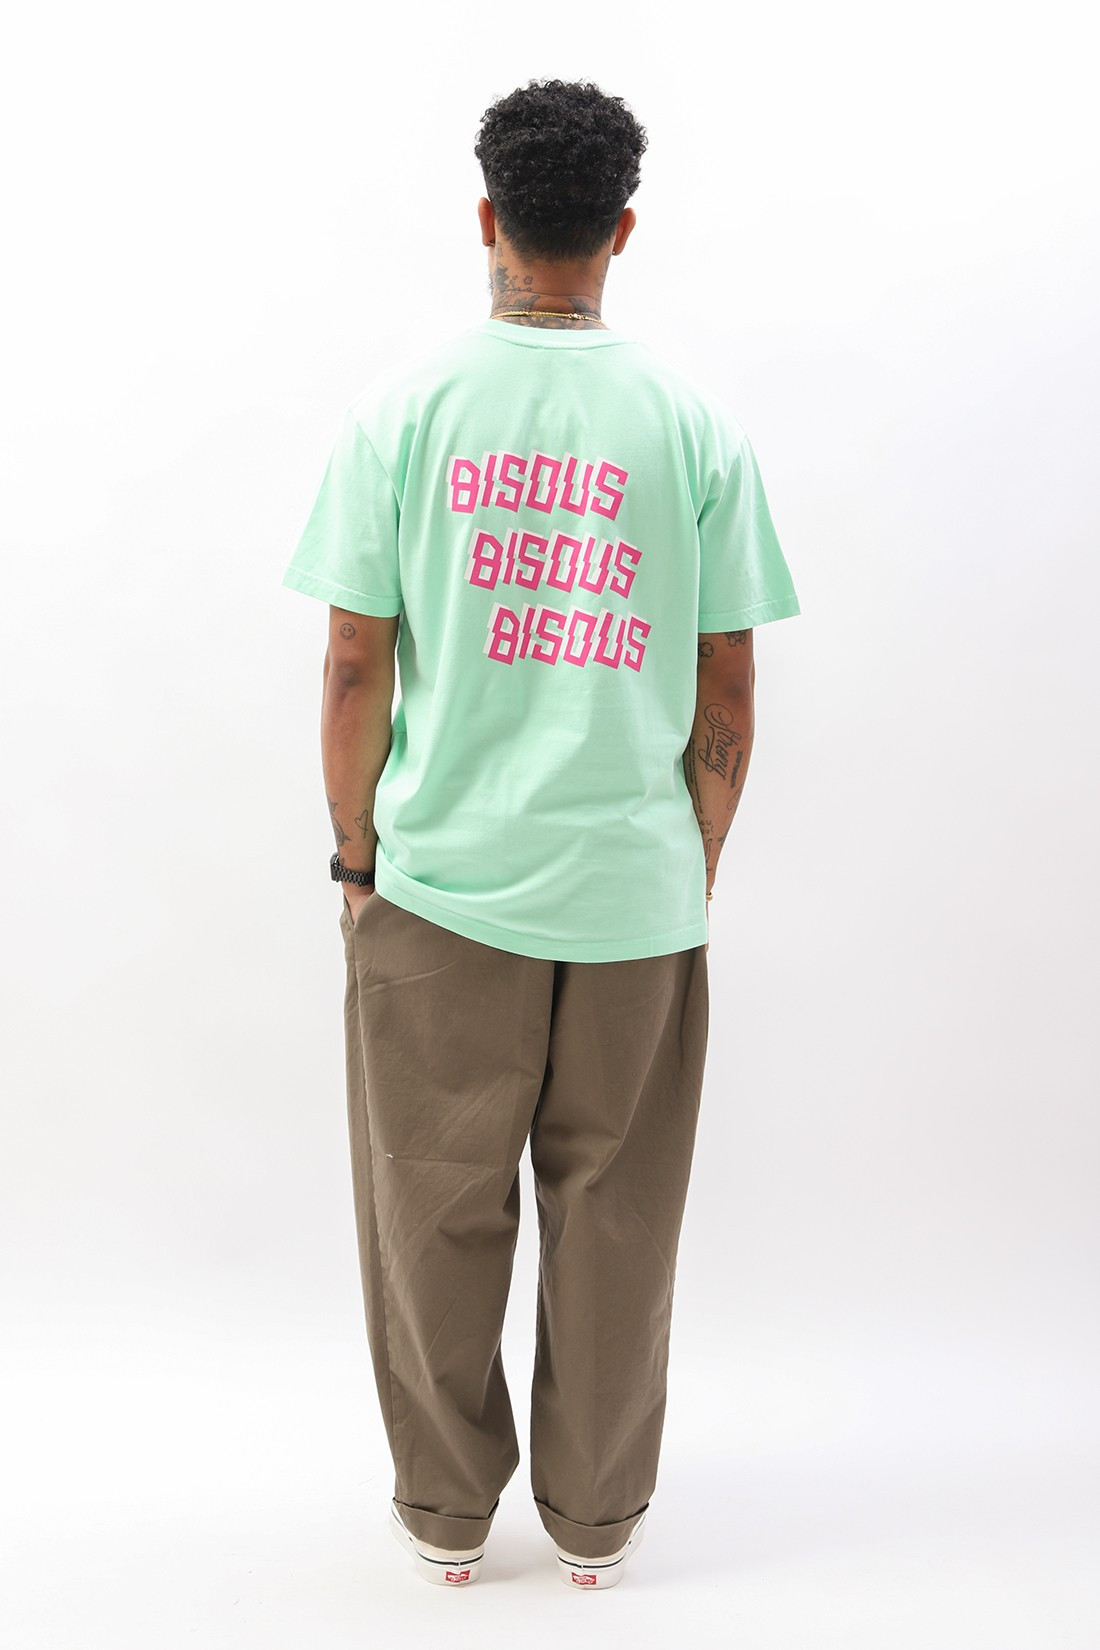 BISOUS SKATEBOARDS / T-shirt bisous x3 back Light green